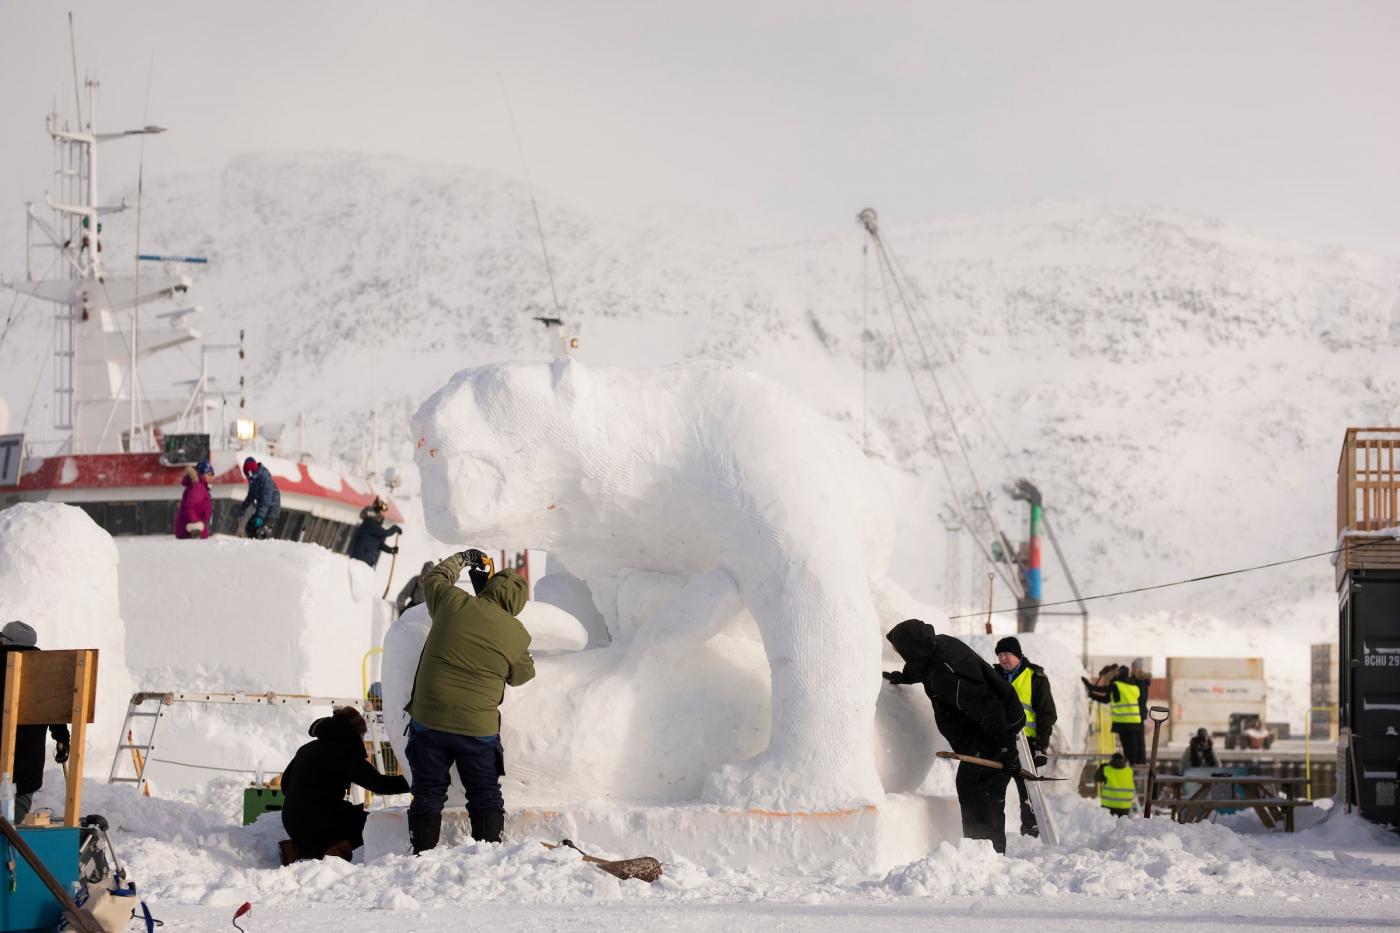 polar bear snow sculpture. Photo - Aningaaq R. Carlsen, Visit Greenland